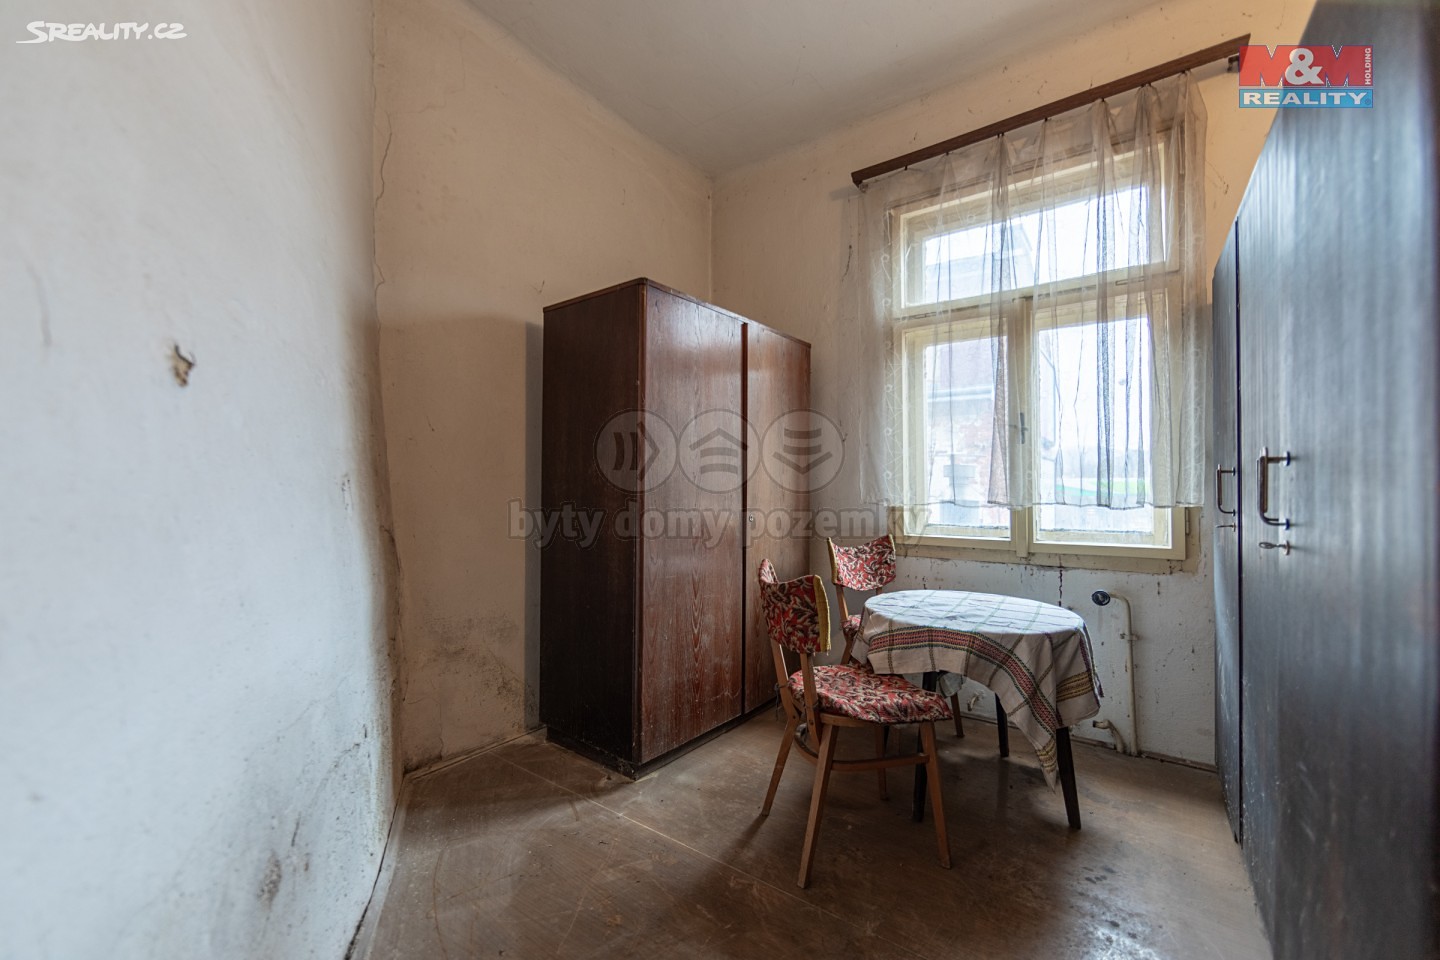 Prodej  rodinného domu 243 m², pozemek 703 m², Chebská, Karlovy Vary - Dvory